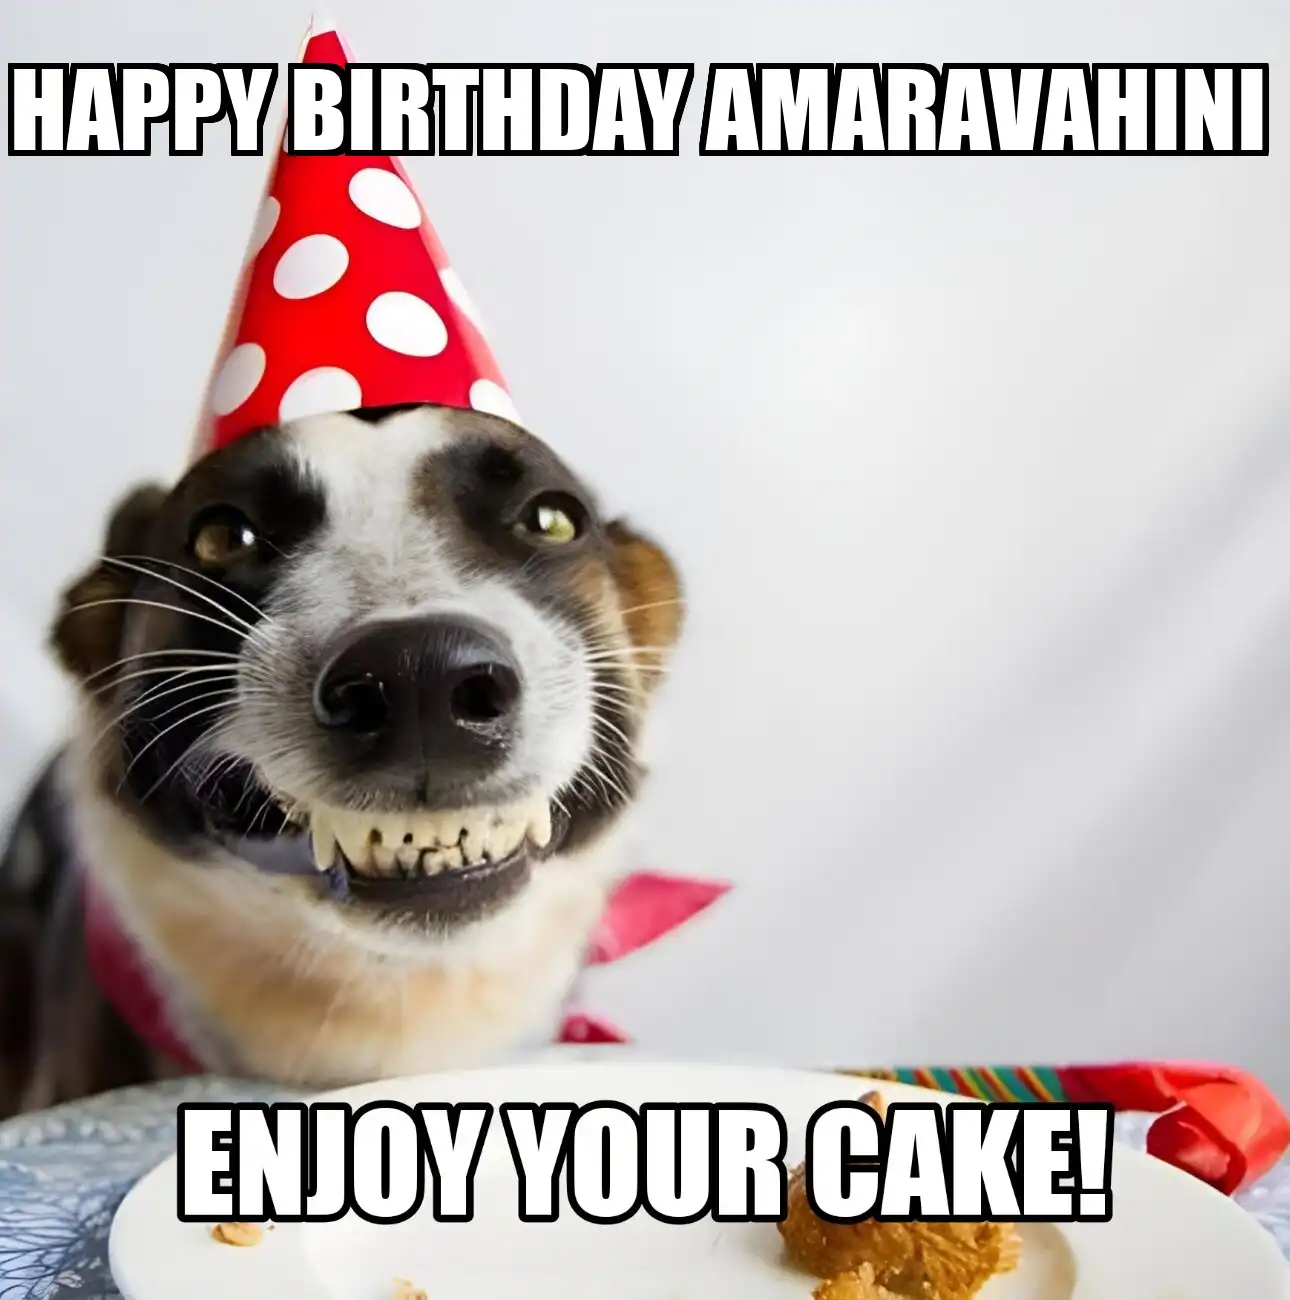 Happy Birthday Amaravahini Enjoy Your Cake Dog Meme